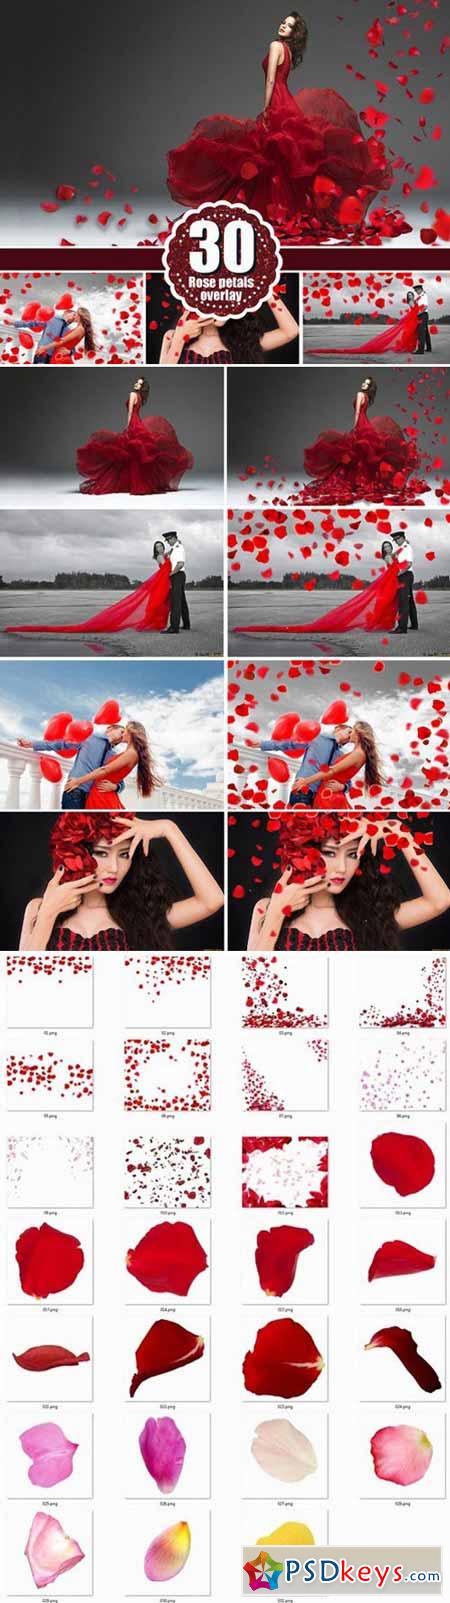 Falling petals photoshop overlays 479281